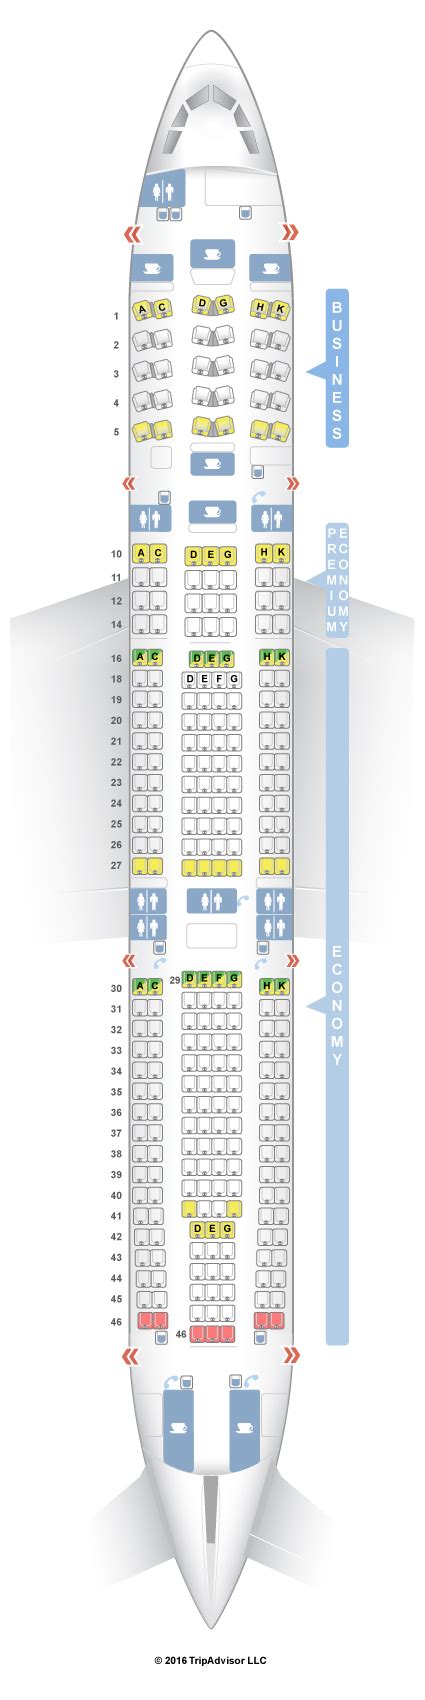 Seatguru Seat Map Lufthansa Airbus A340 300 343 V1